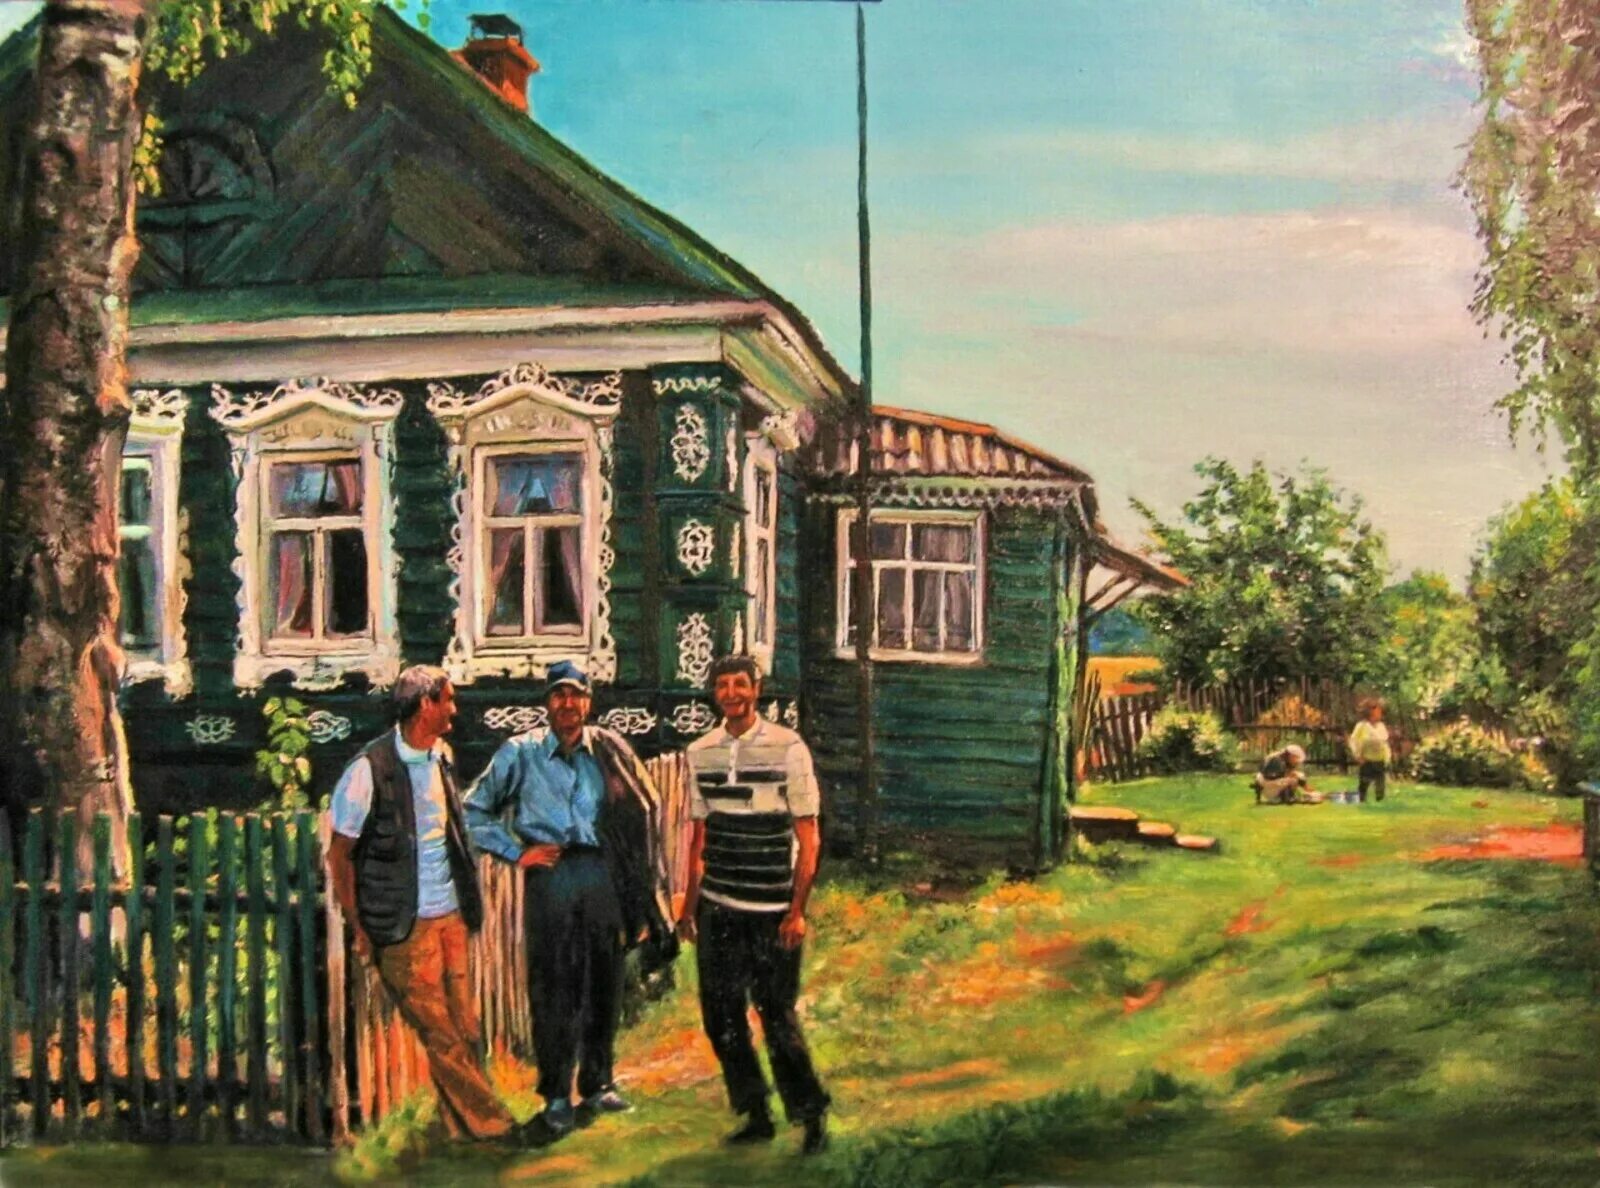 Татарские про деревню